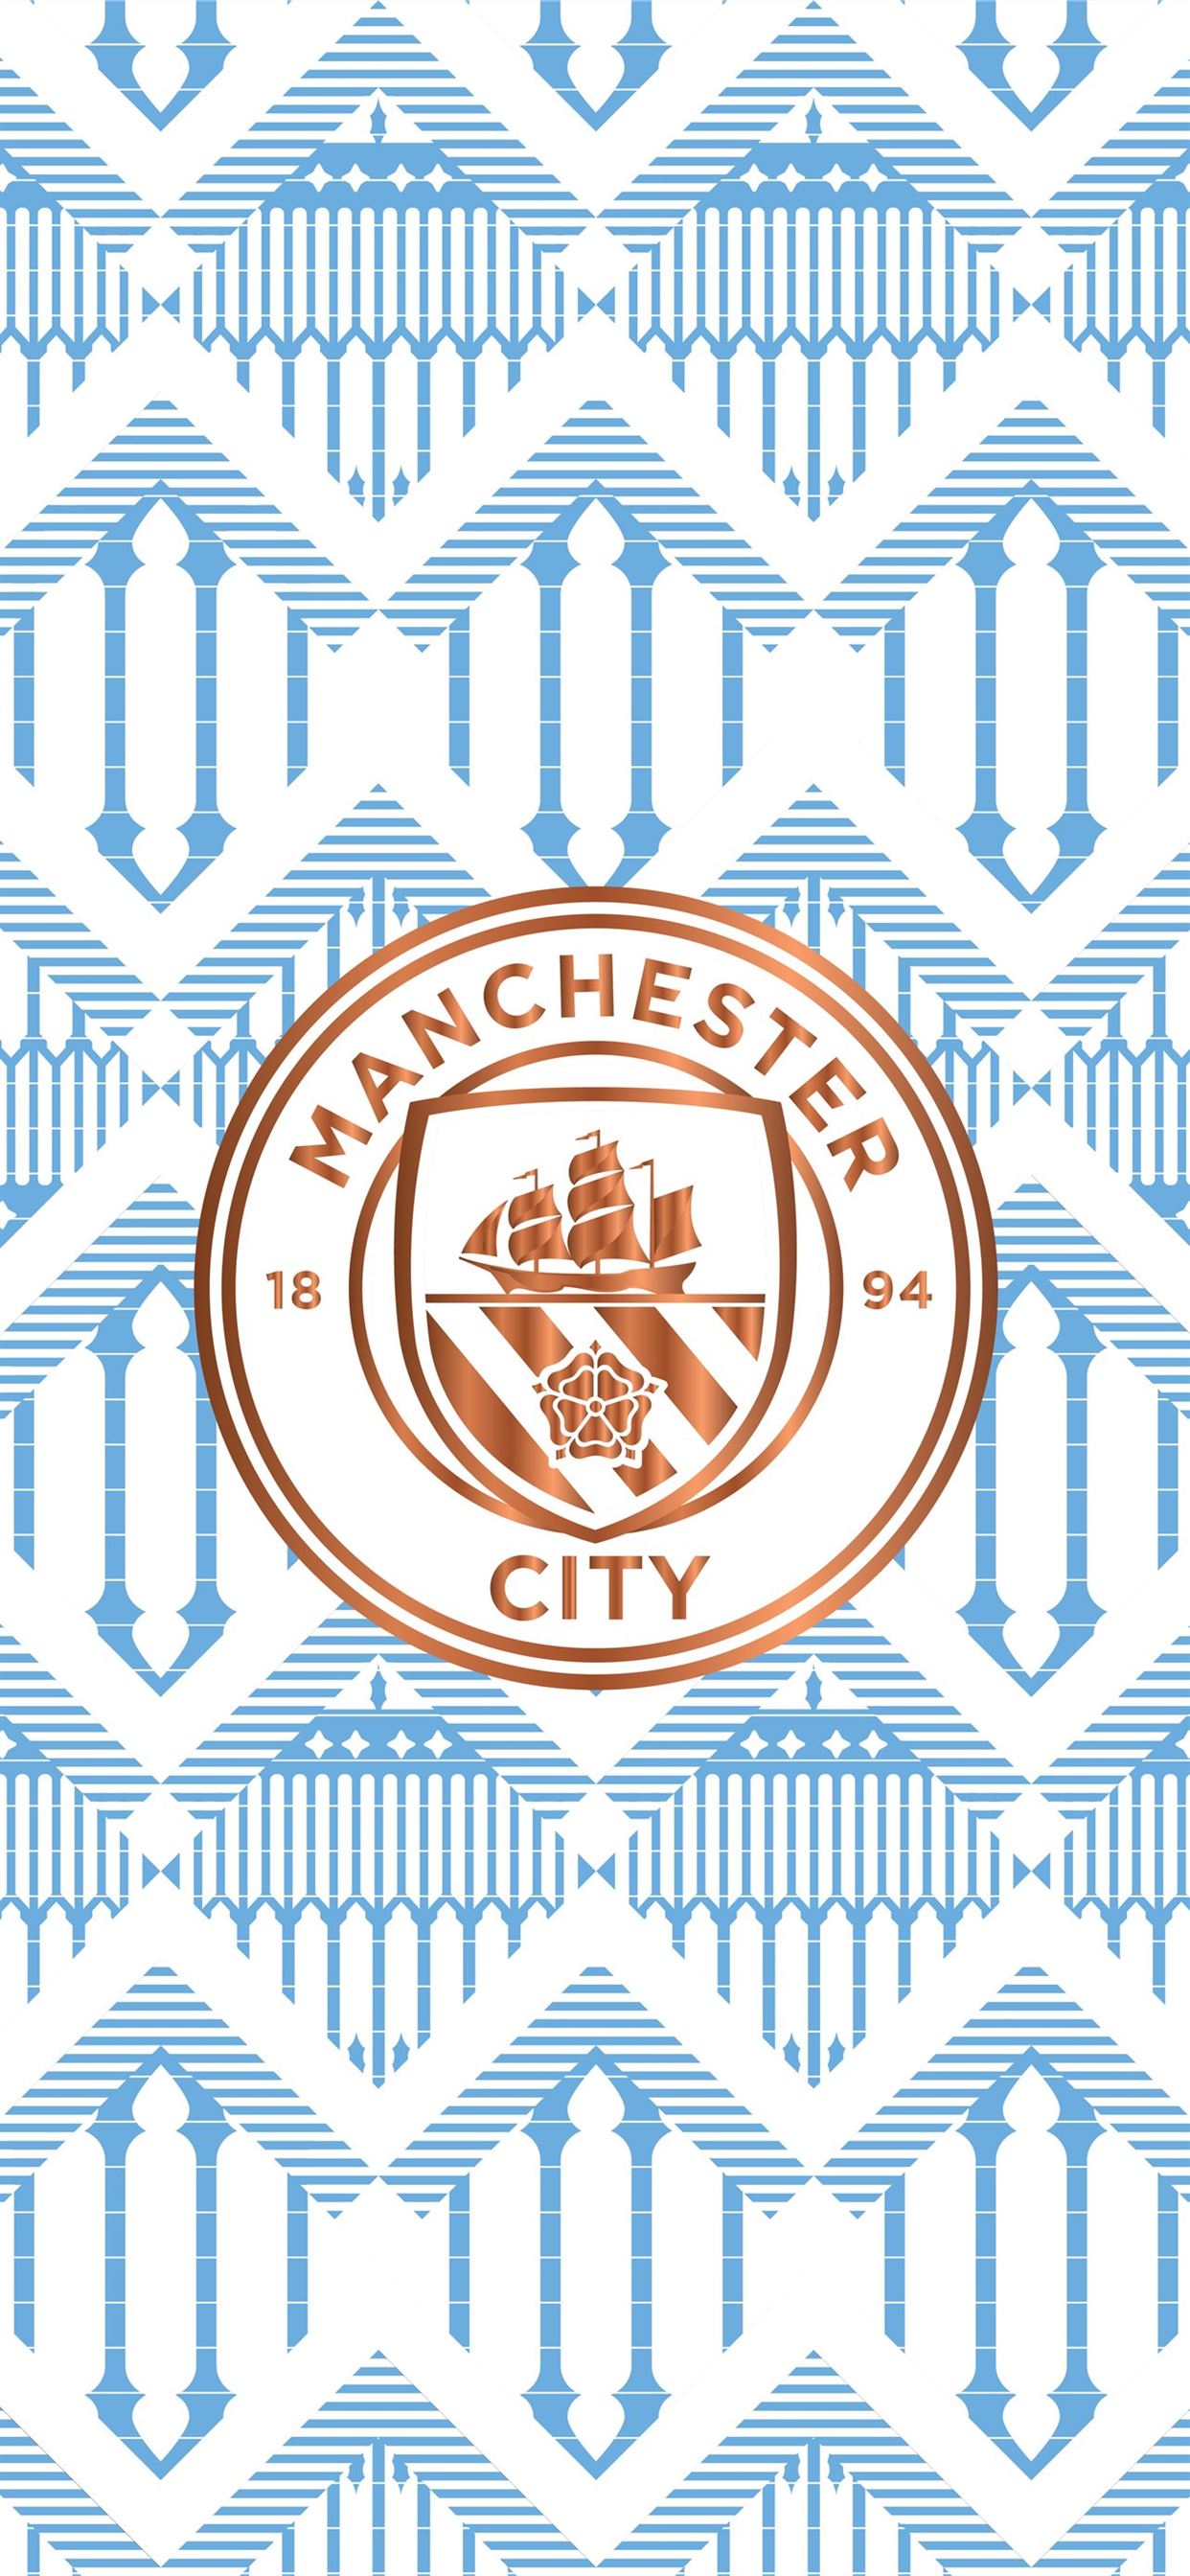 Manchester City UEFA Champions League 2023 Champions Desktop Wallpapers   PixelsTalkNet